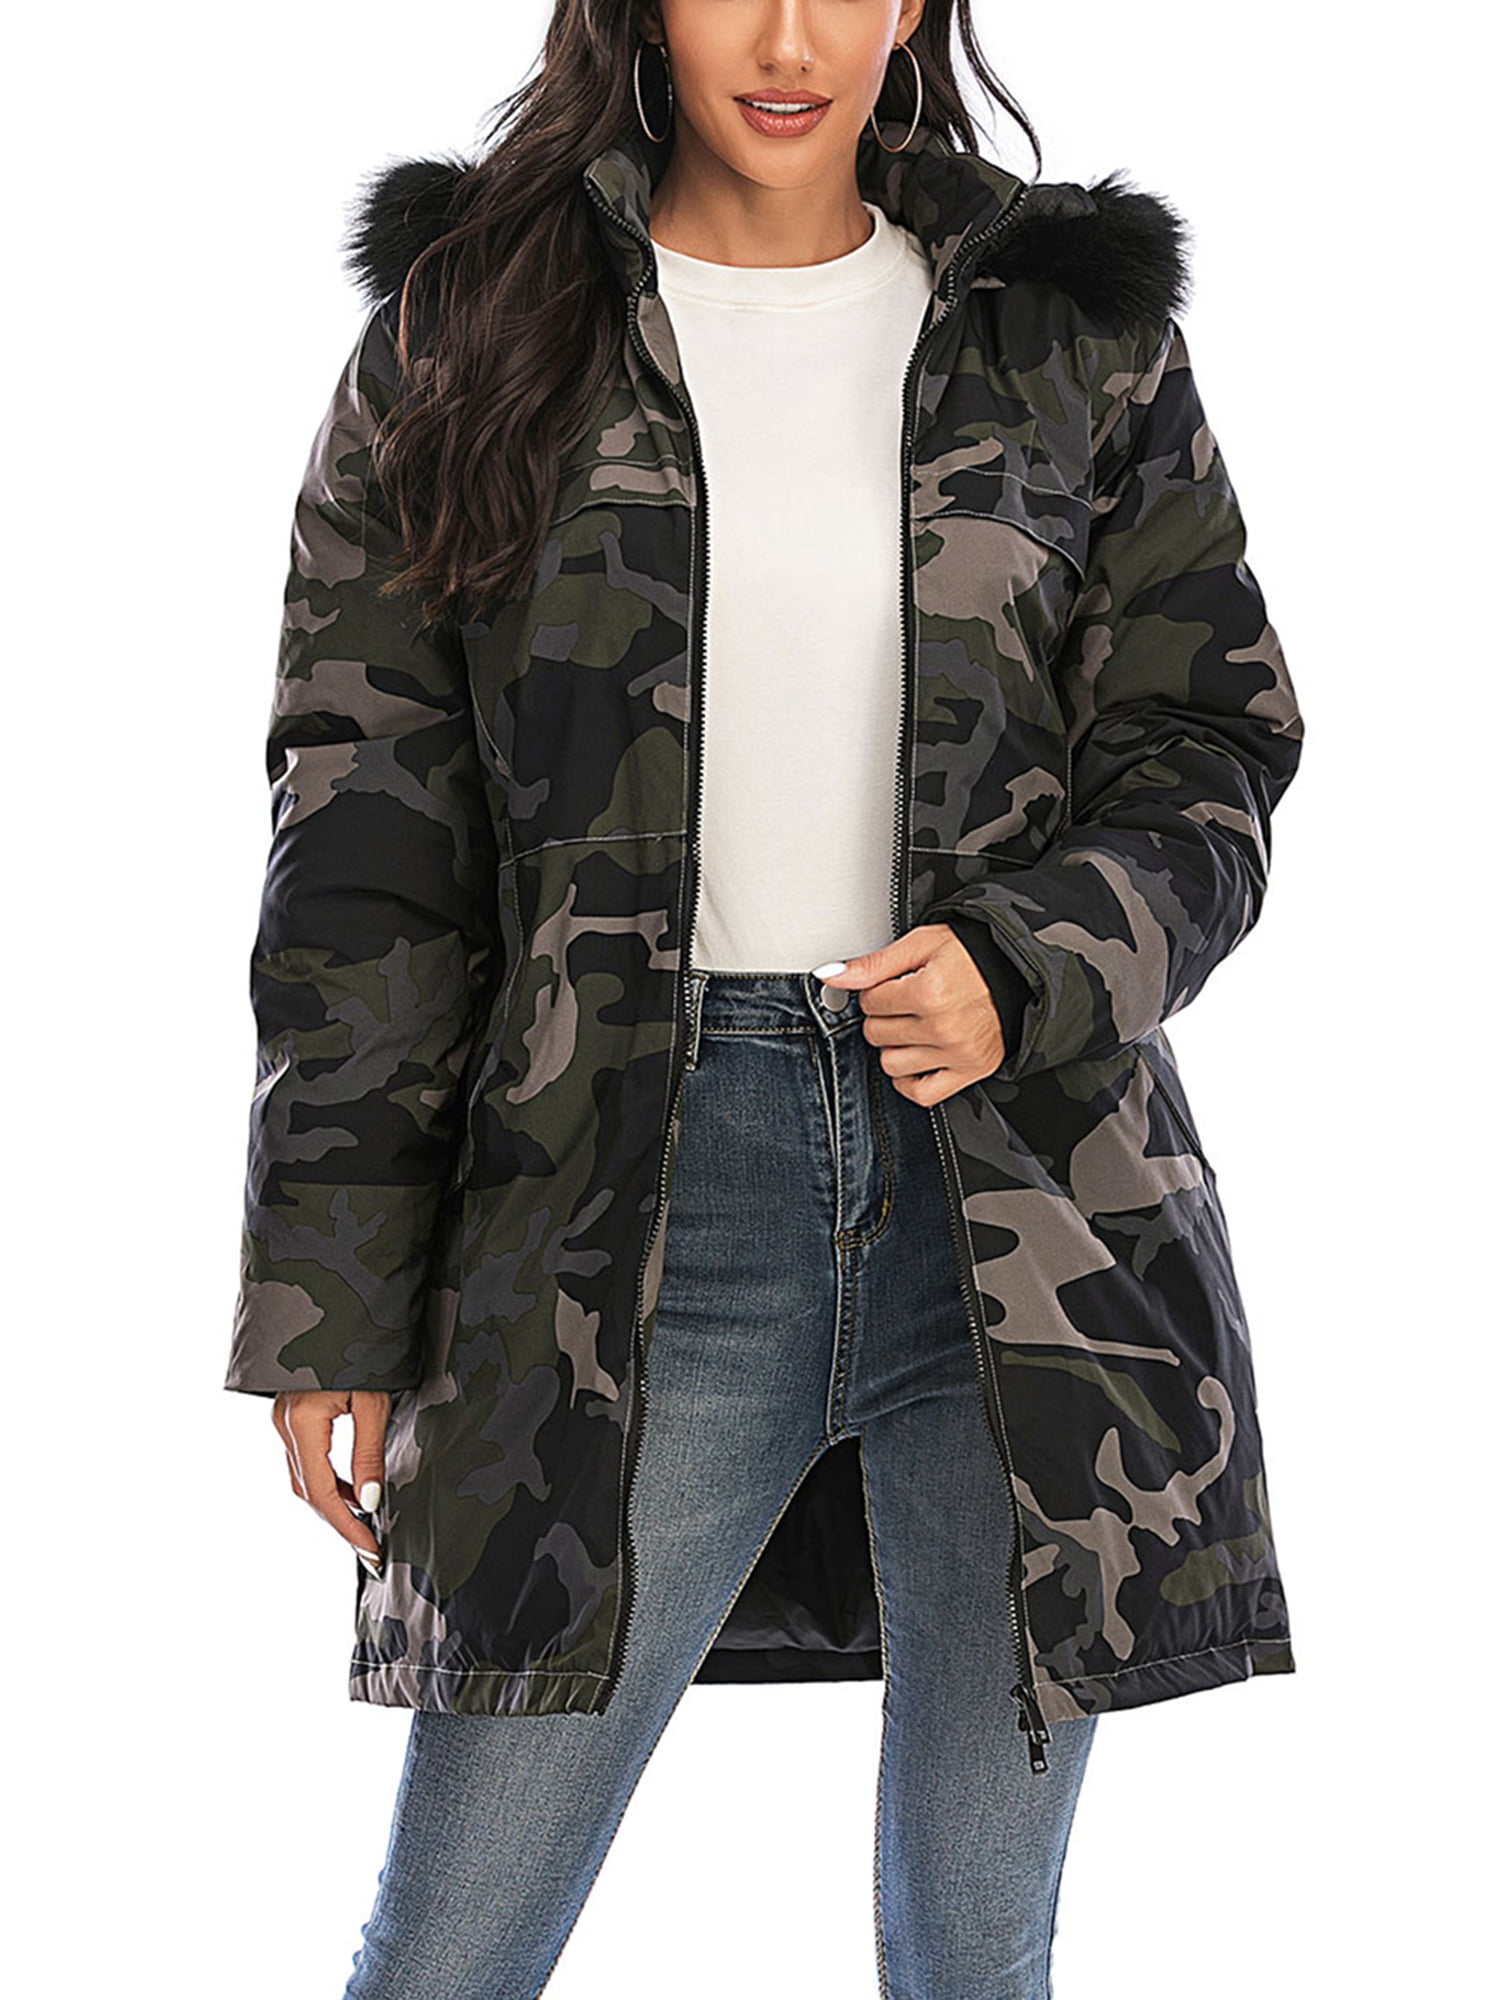 Women Puffer Coat Jacket Velvet Hooded Parka Outerwear Thick Padded Quilt Winter